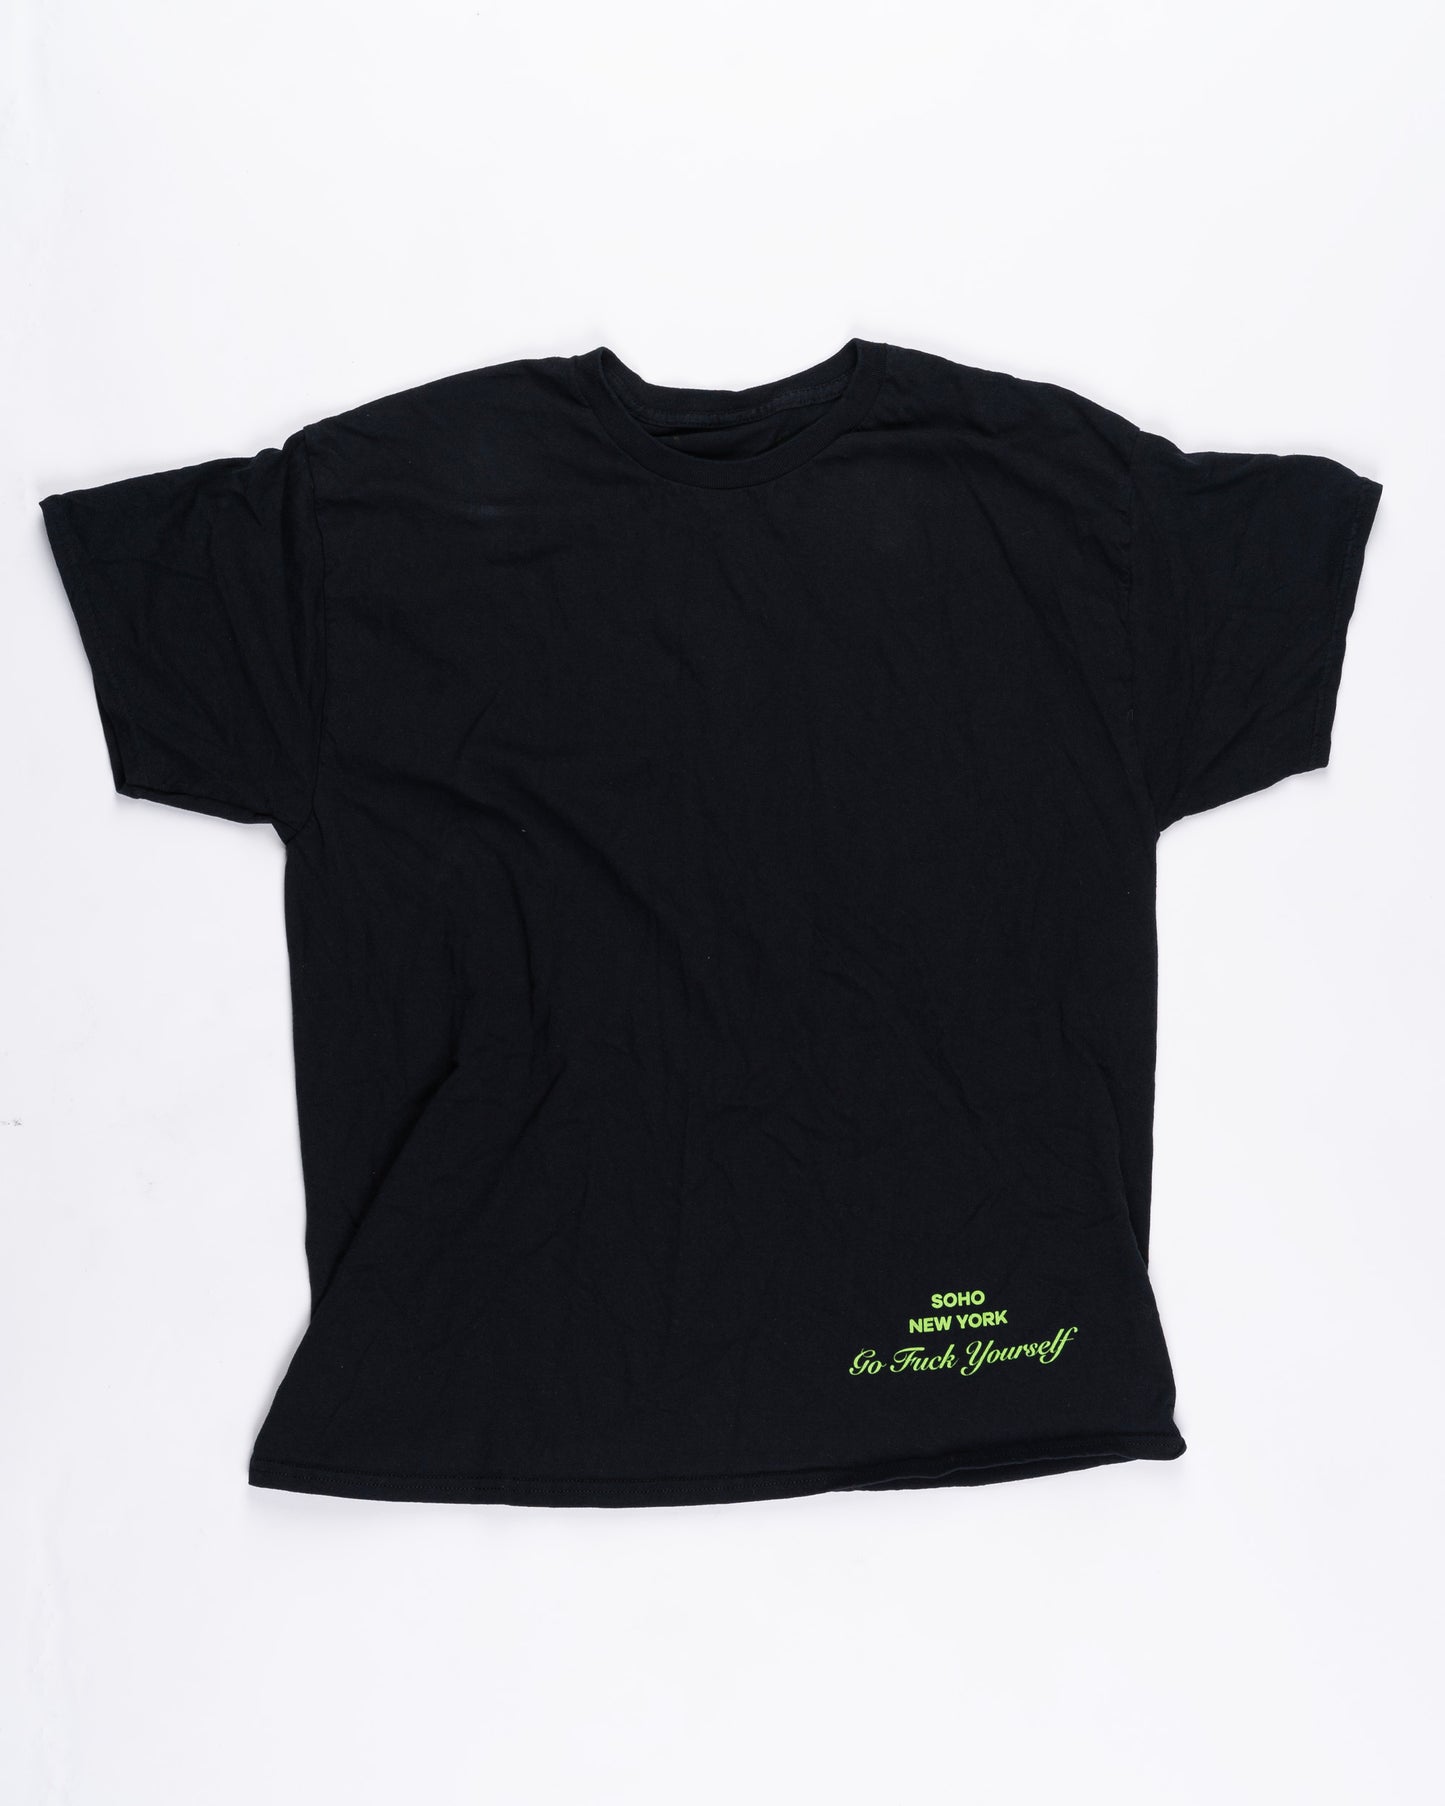 Black T-Shirt Size: XXLarge